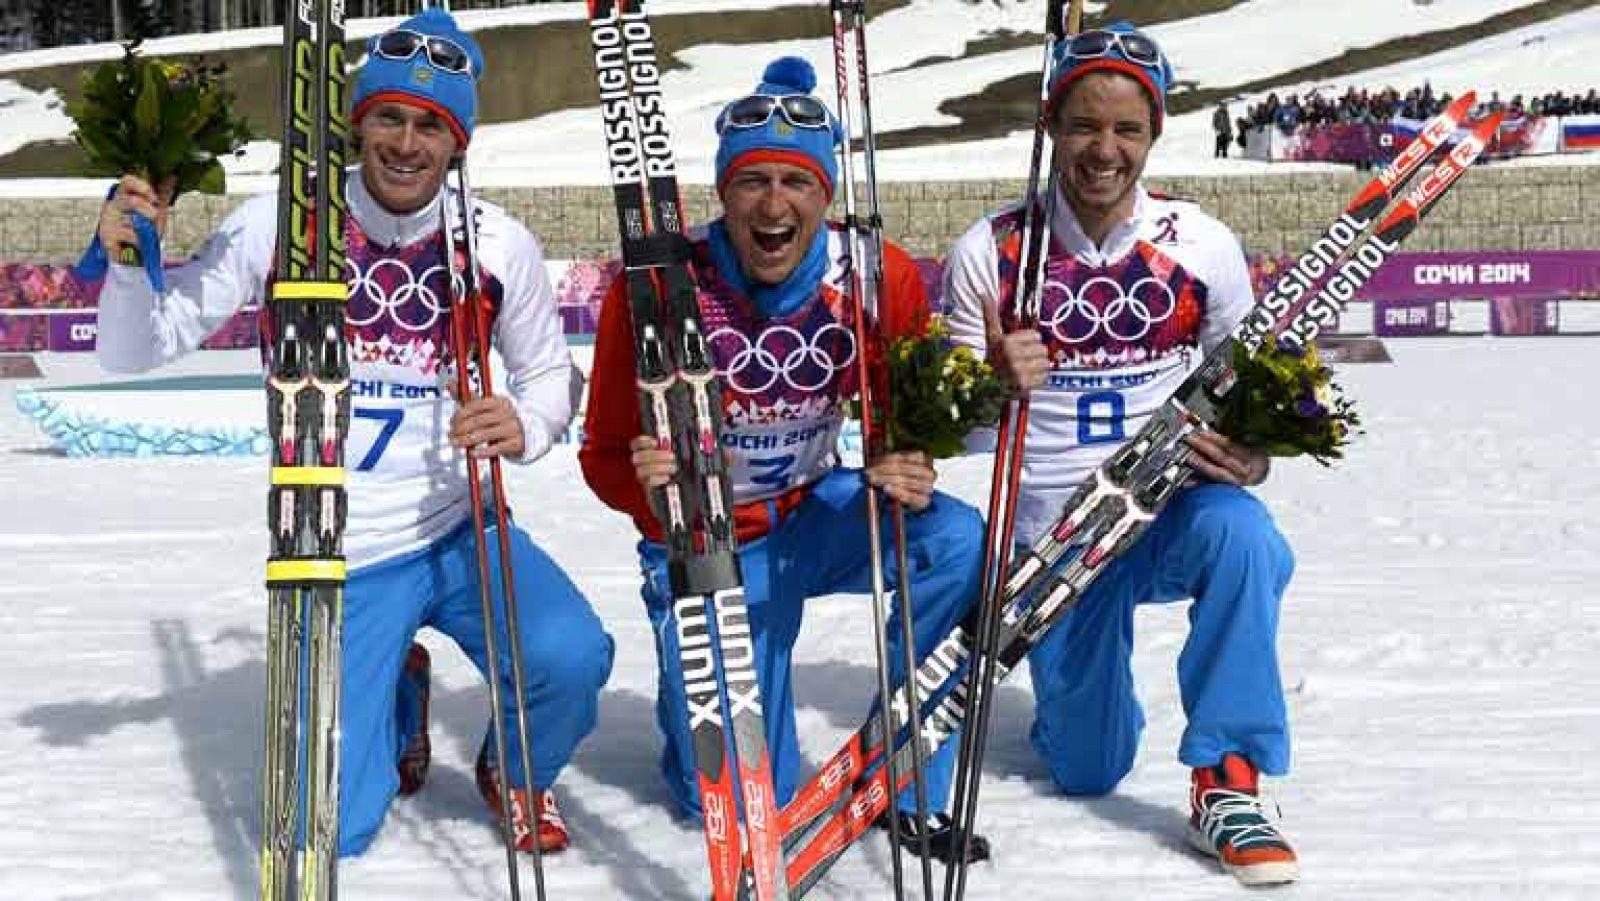 Telediario 1: Triplete ruso en los 50 kilómetros de esquí de fondo | RTVE Play